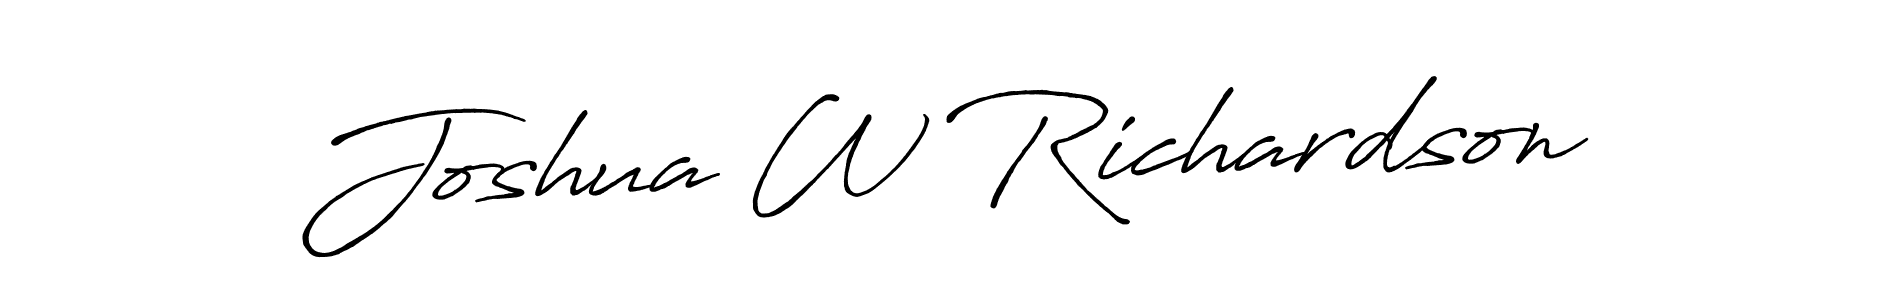 How to Draw Joshua W Richardson signature style? Antro_Vectra_Bolder is a latest design signature styles for name Joshua W Richardson. Joshua W Richardson signature style 7 images and pictures png